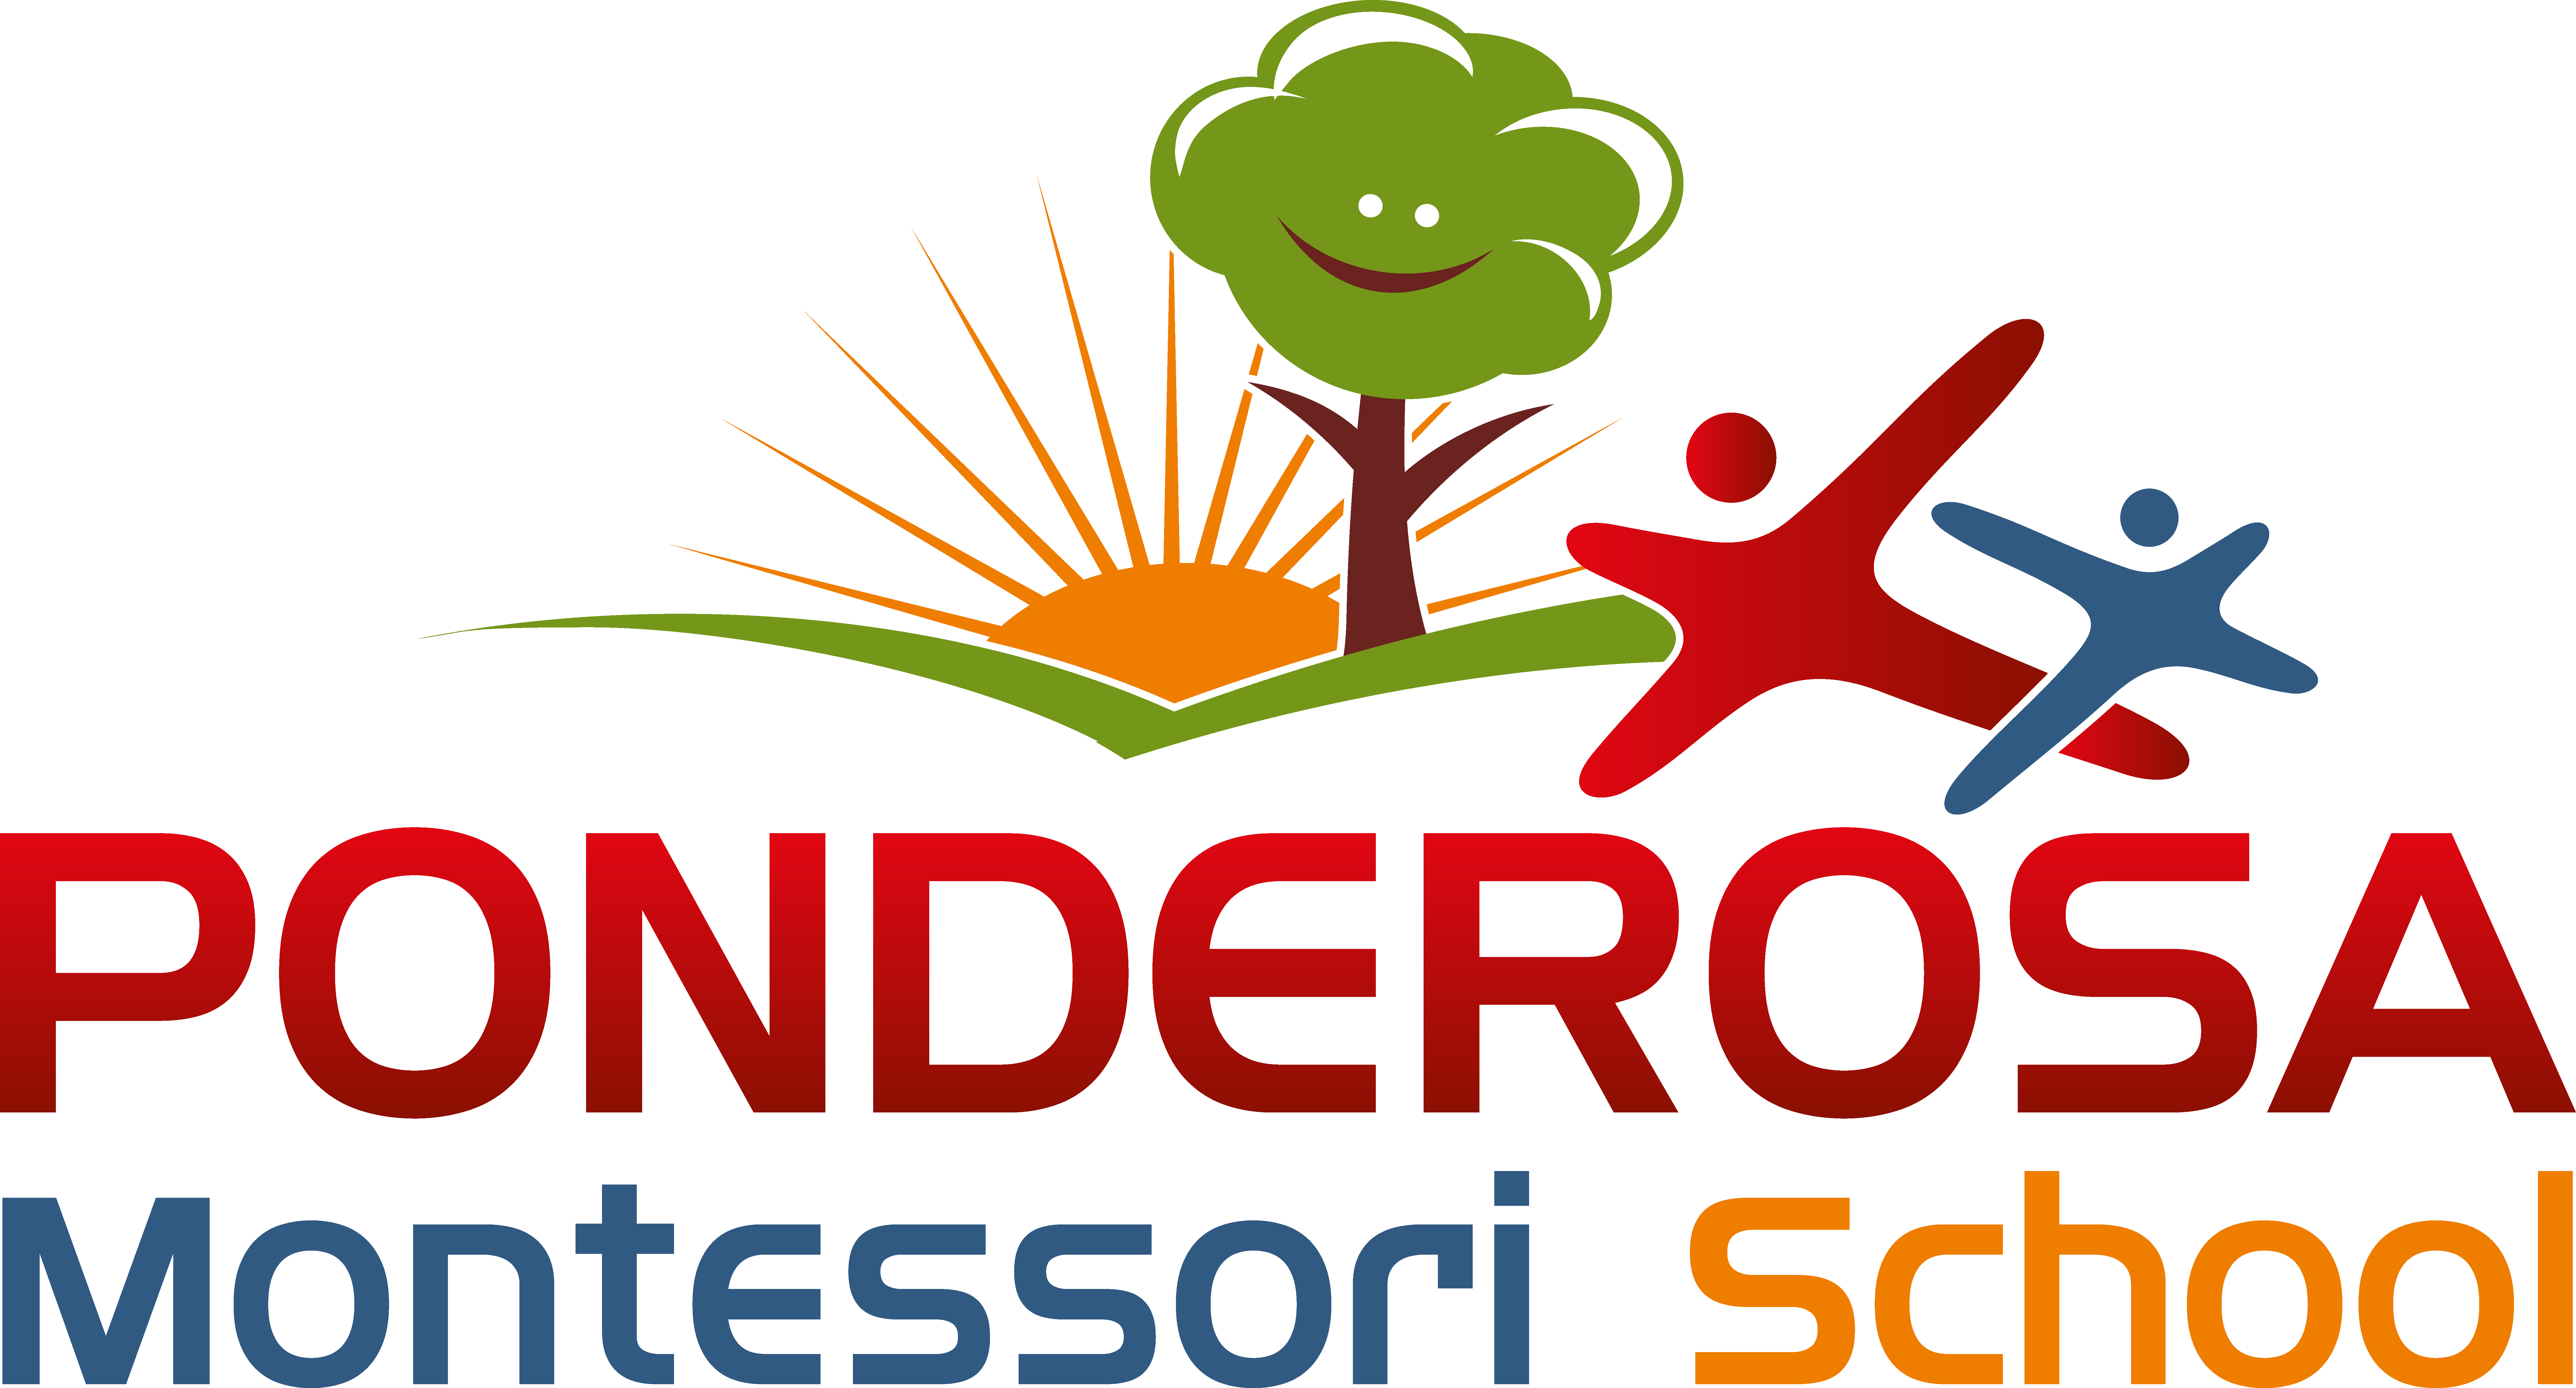 Ponderosa Montessori School Online!